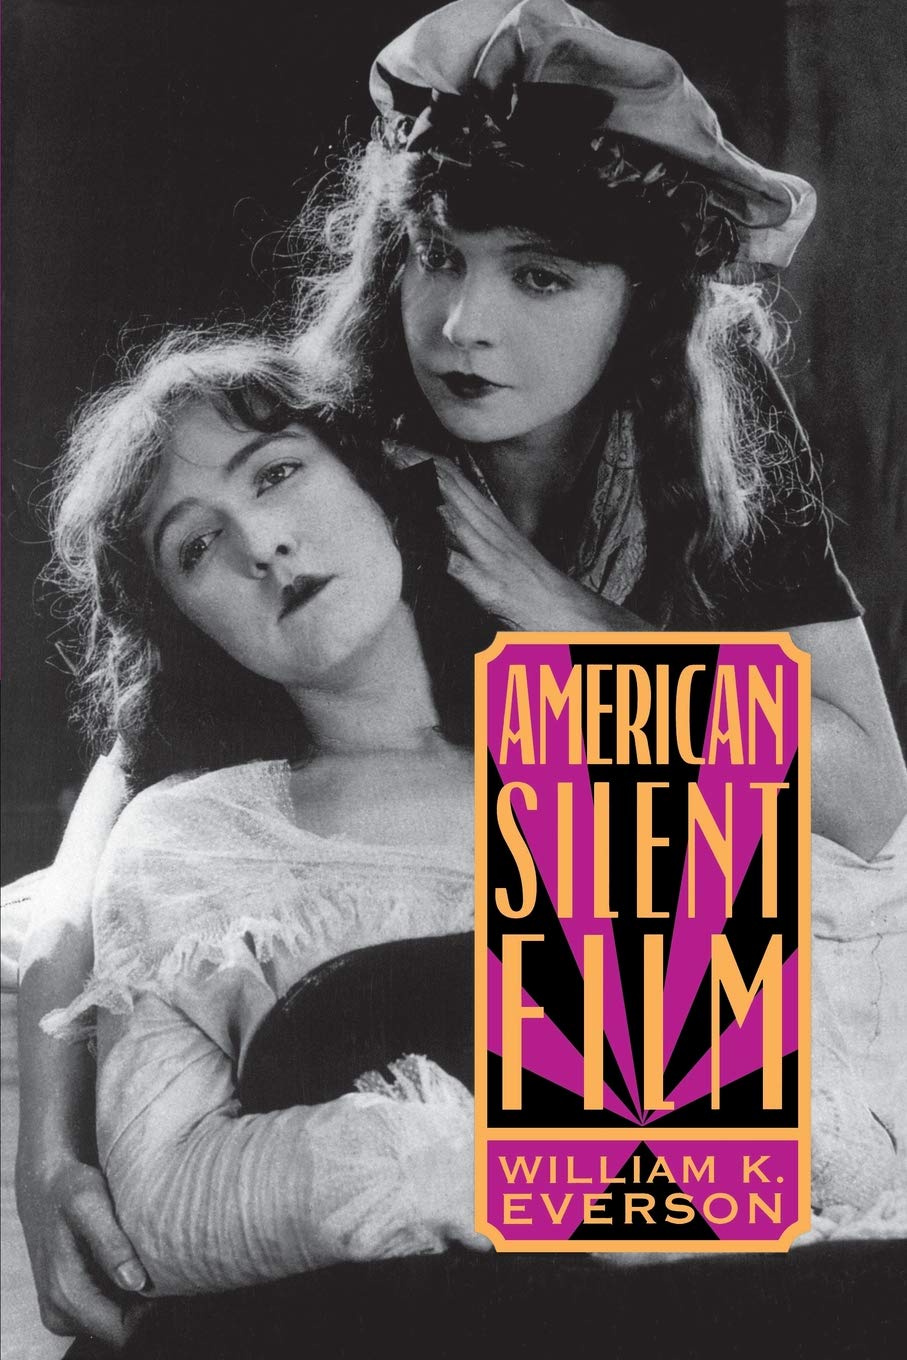 American silent film